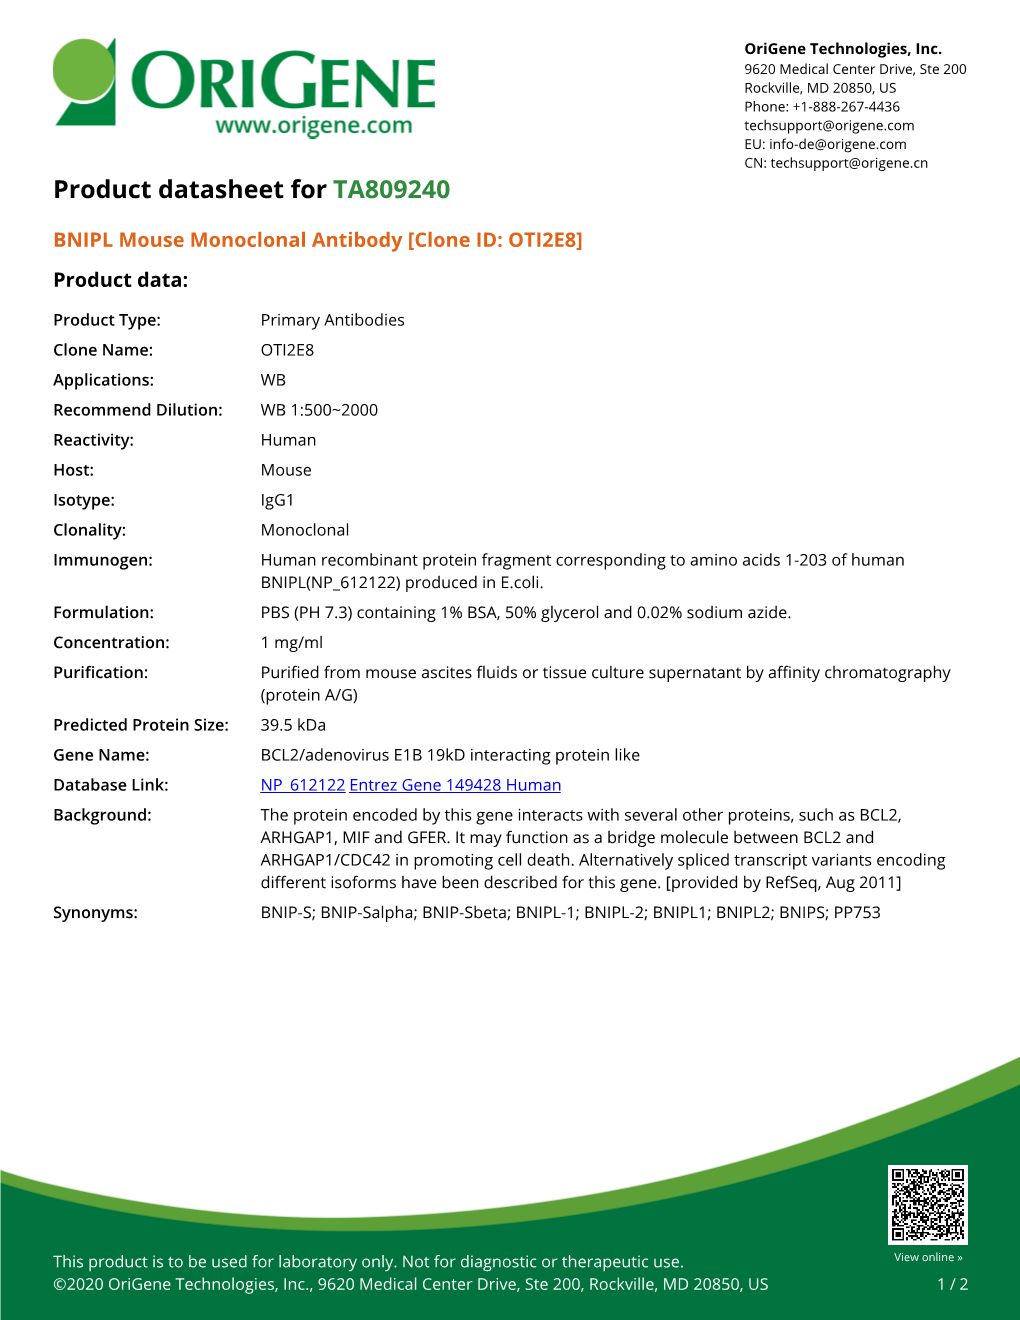 BNIPL Mouse Monoclonal Antibody [Clone ID: OTI2E8] – TA809240